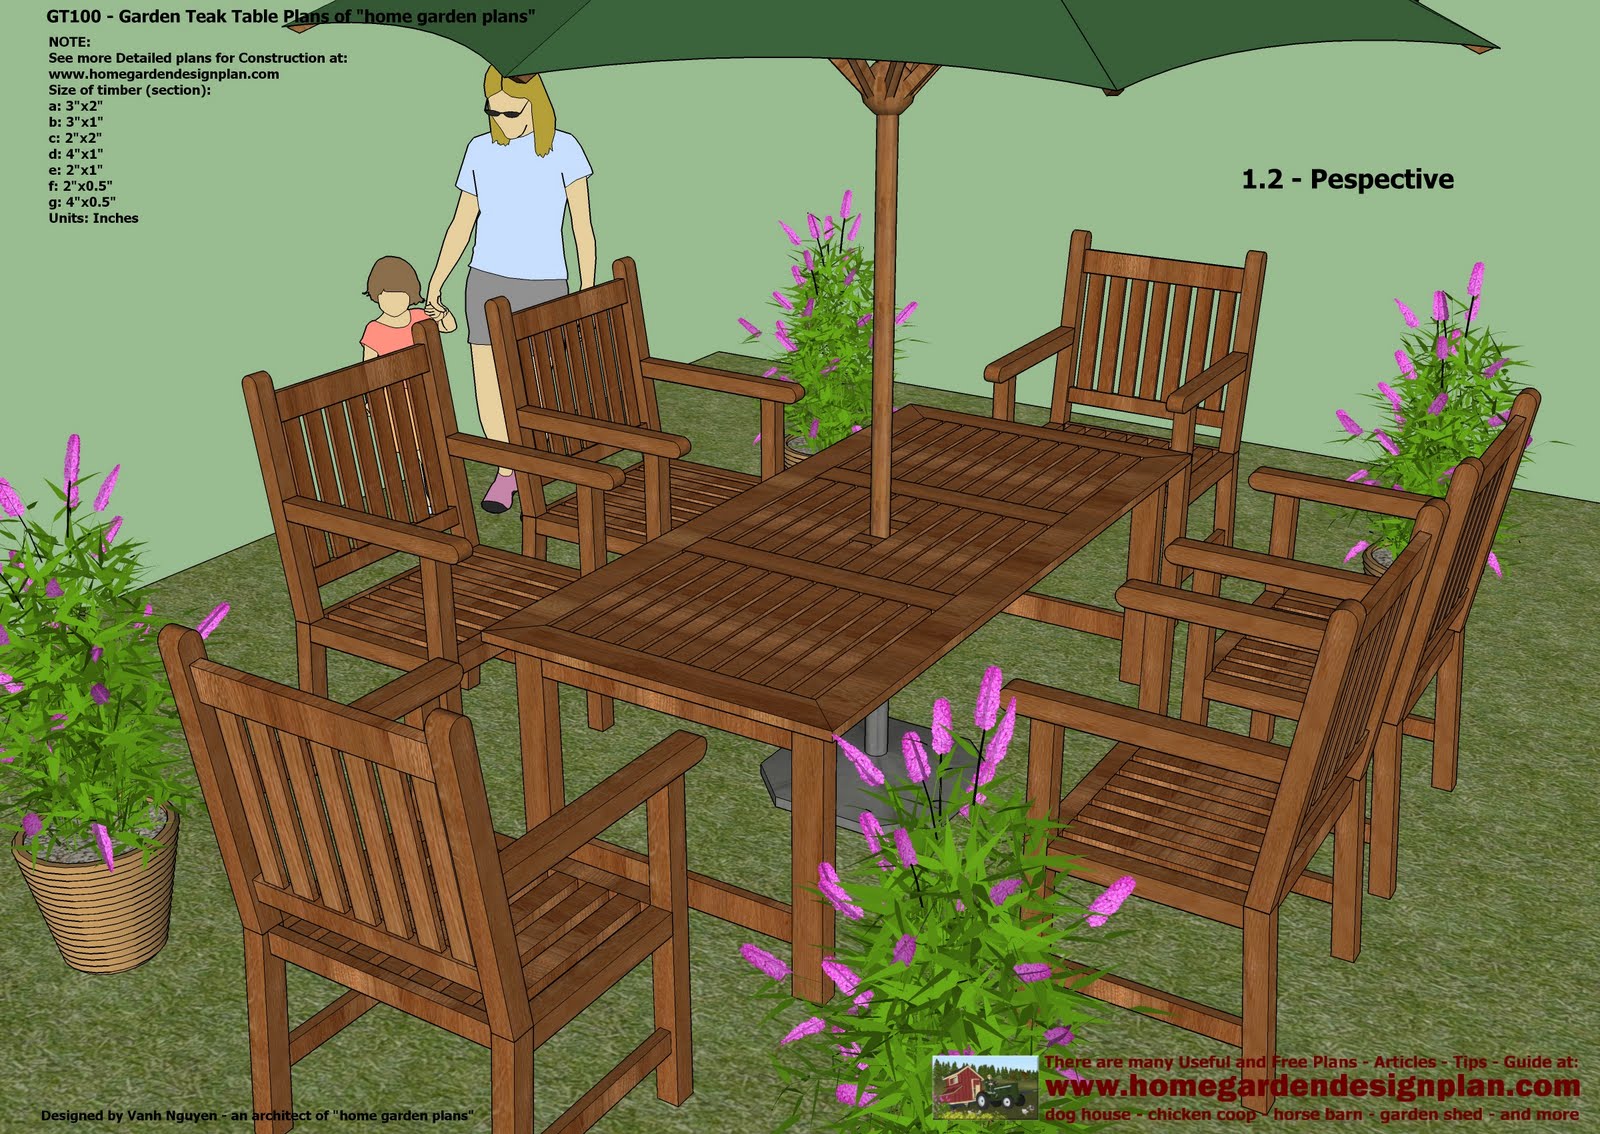 home garden plans: GT100 - Garden Teak Tables ...